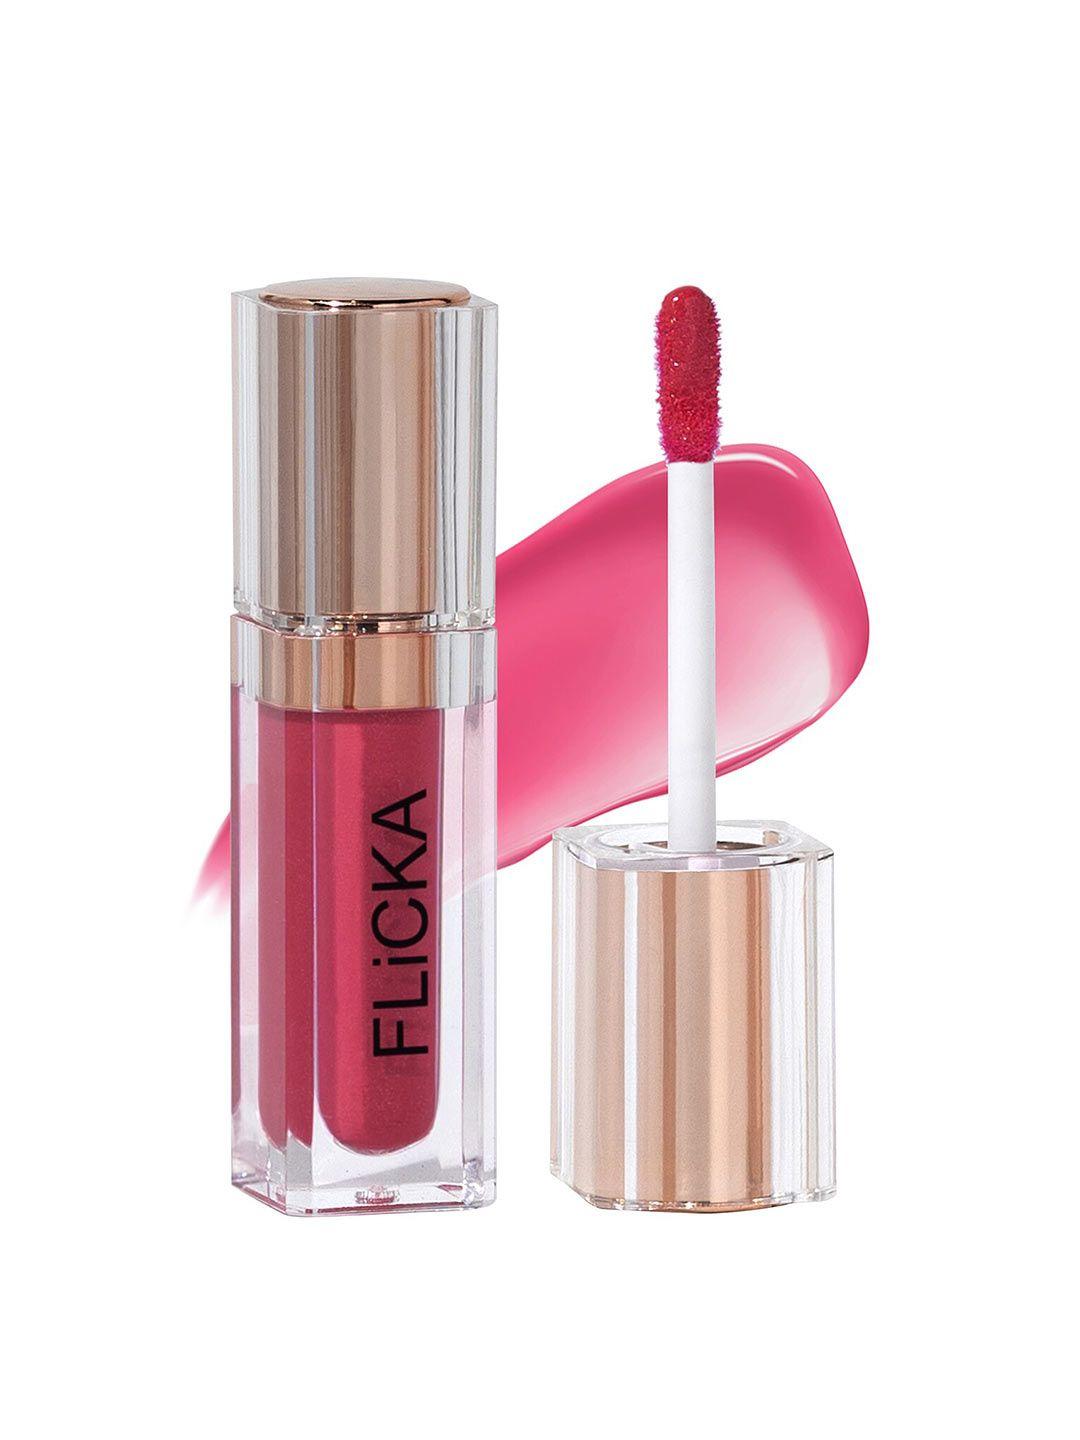 flicka shimmery affair lightweight non-sticky long-lasting lip gloss 5ml - gin 06